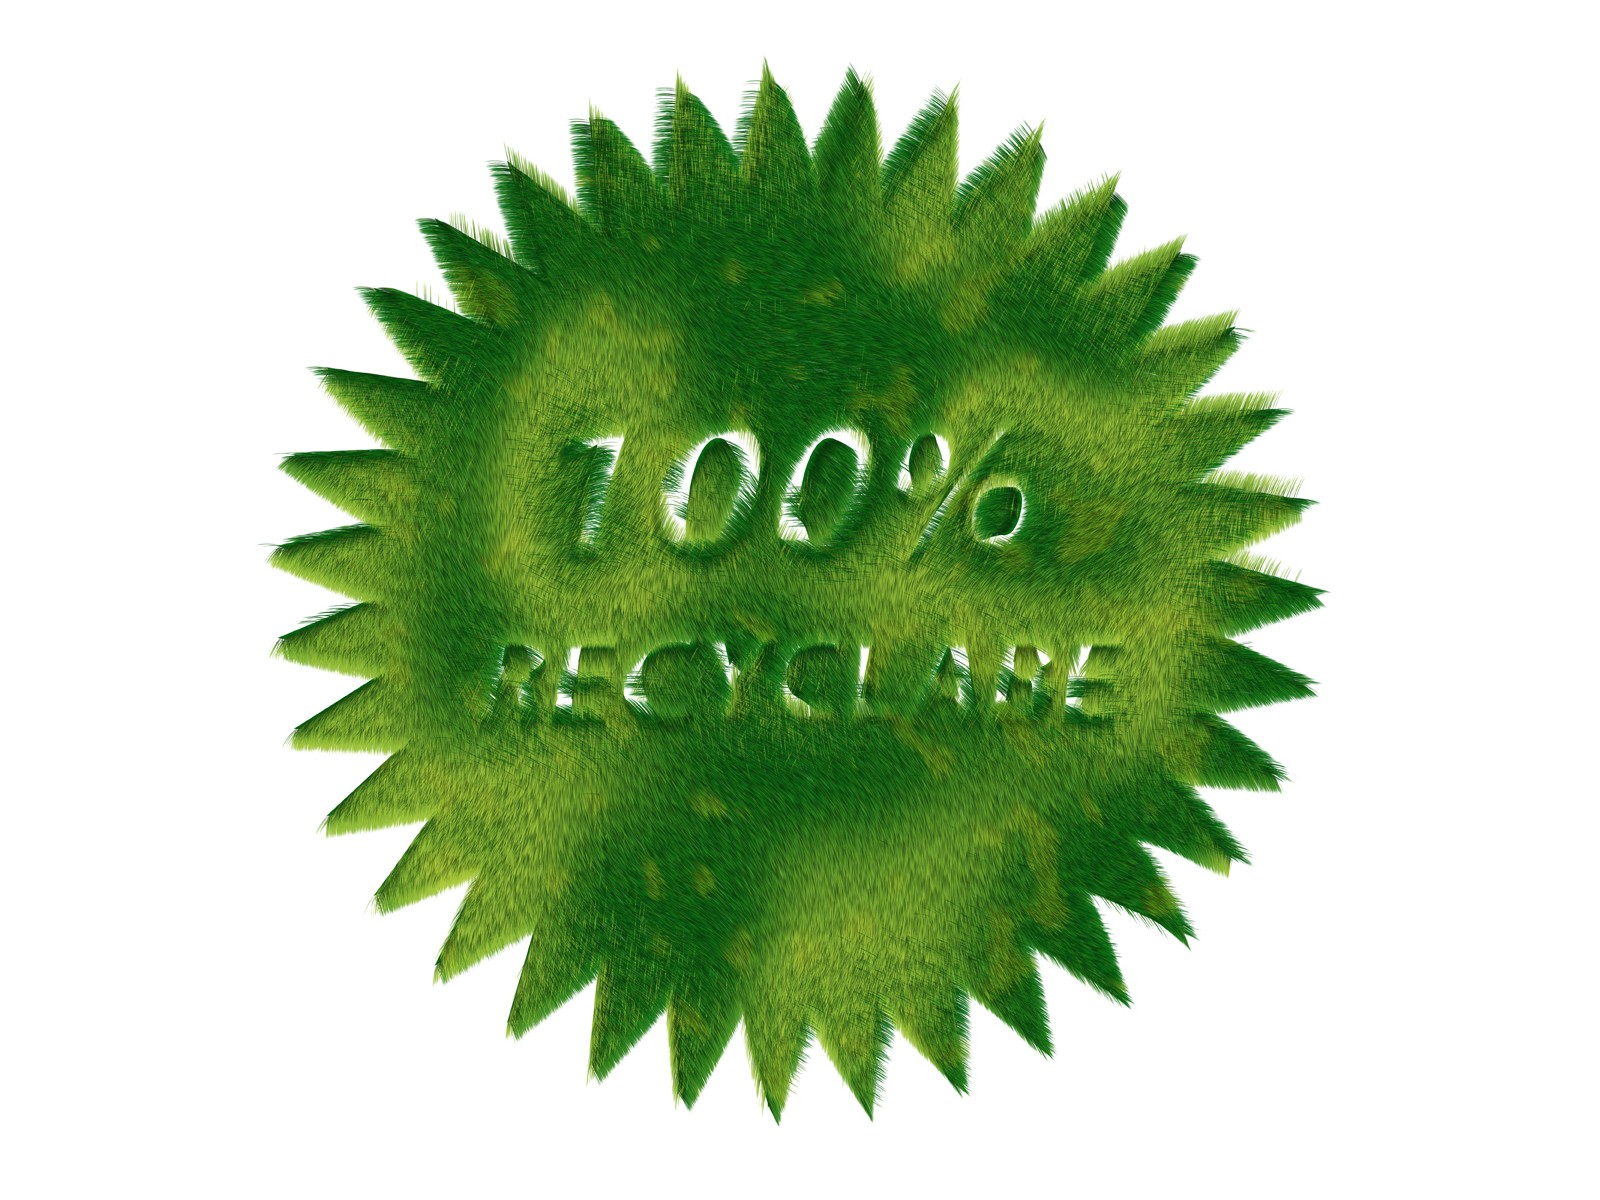 Eco Friendly Symbols - Recycle symbols and Environmental Green